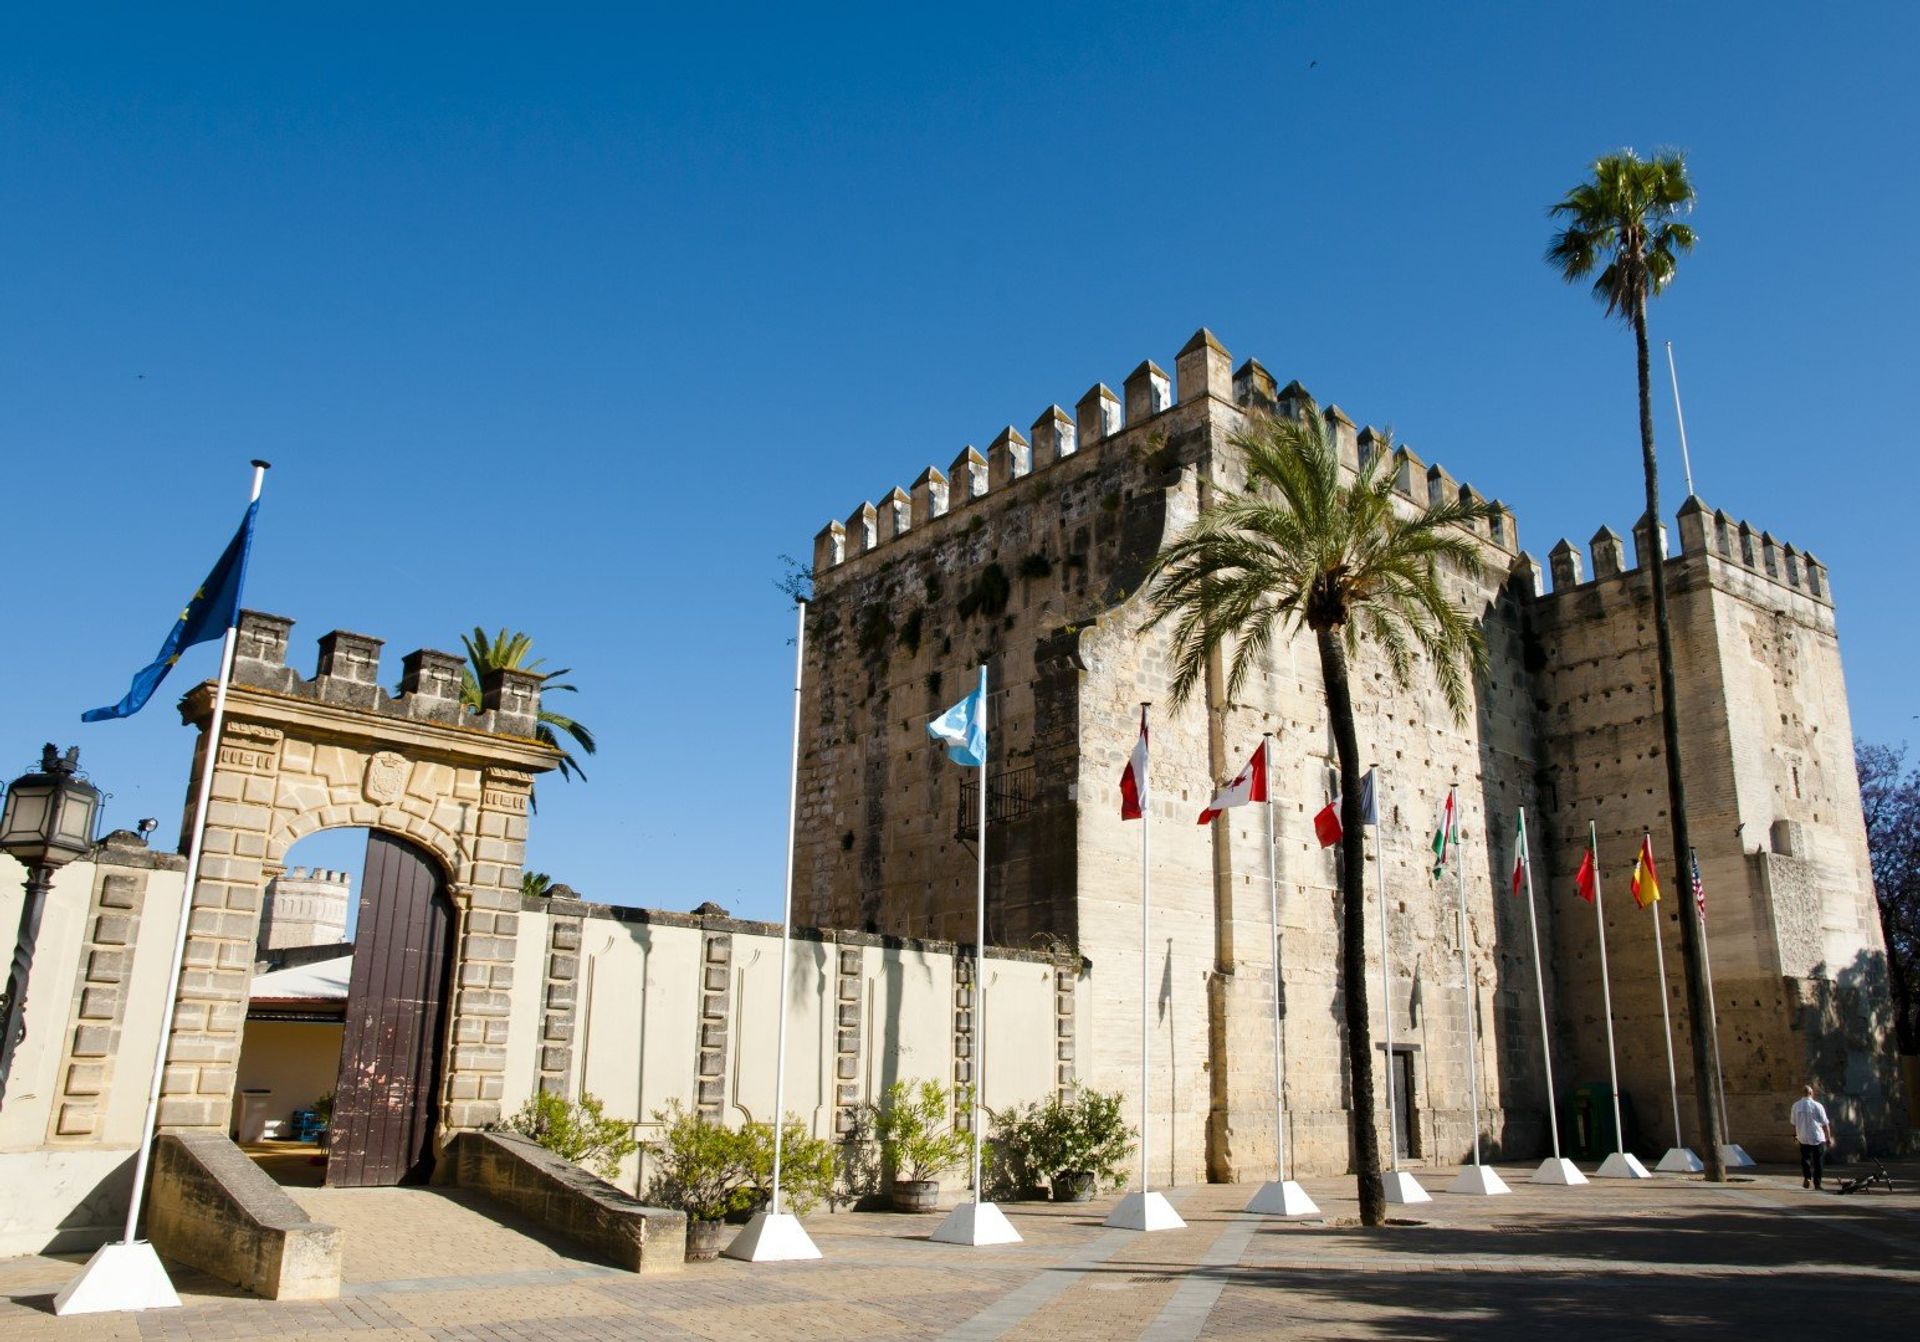 The 11th Century Moorish Alcazar of Jerez tells the story of Cadiz's ancient past